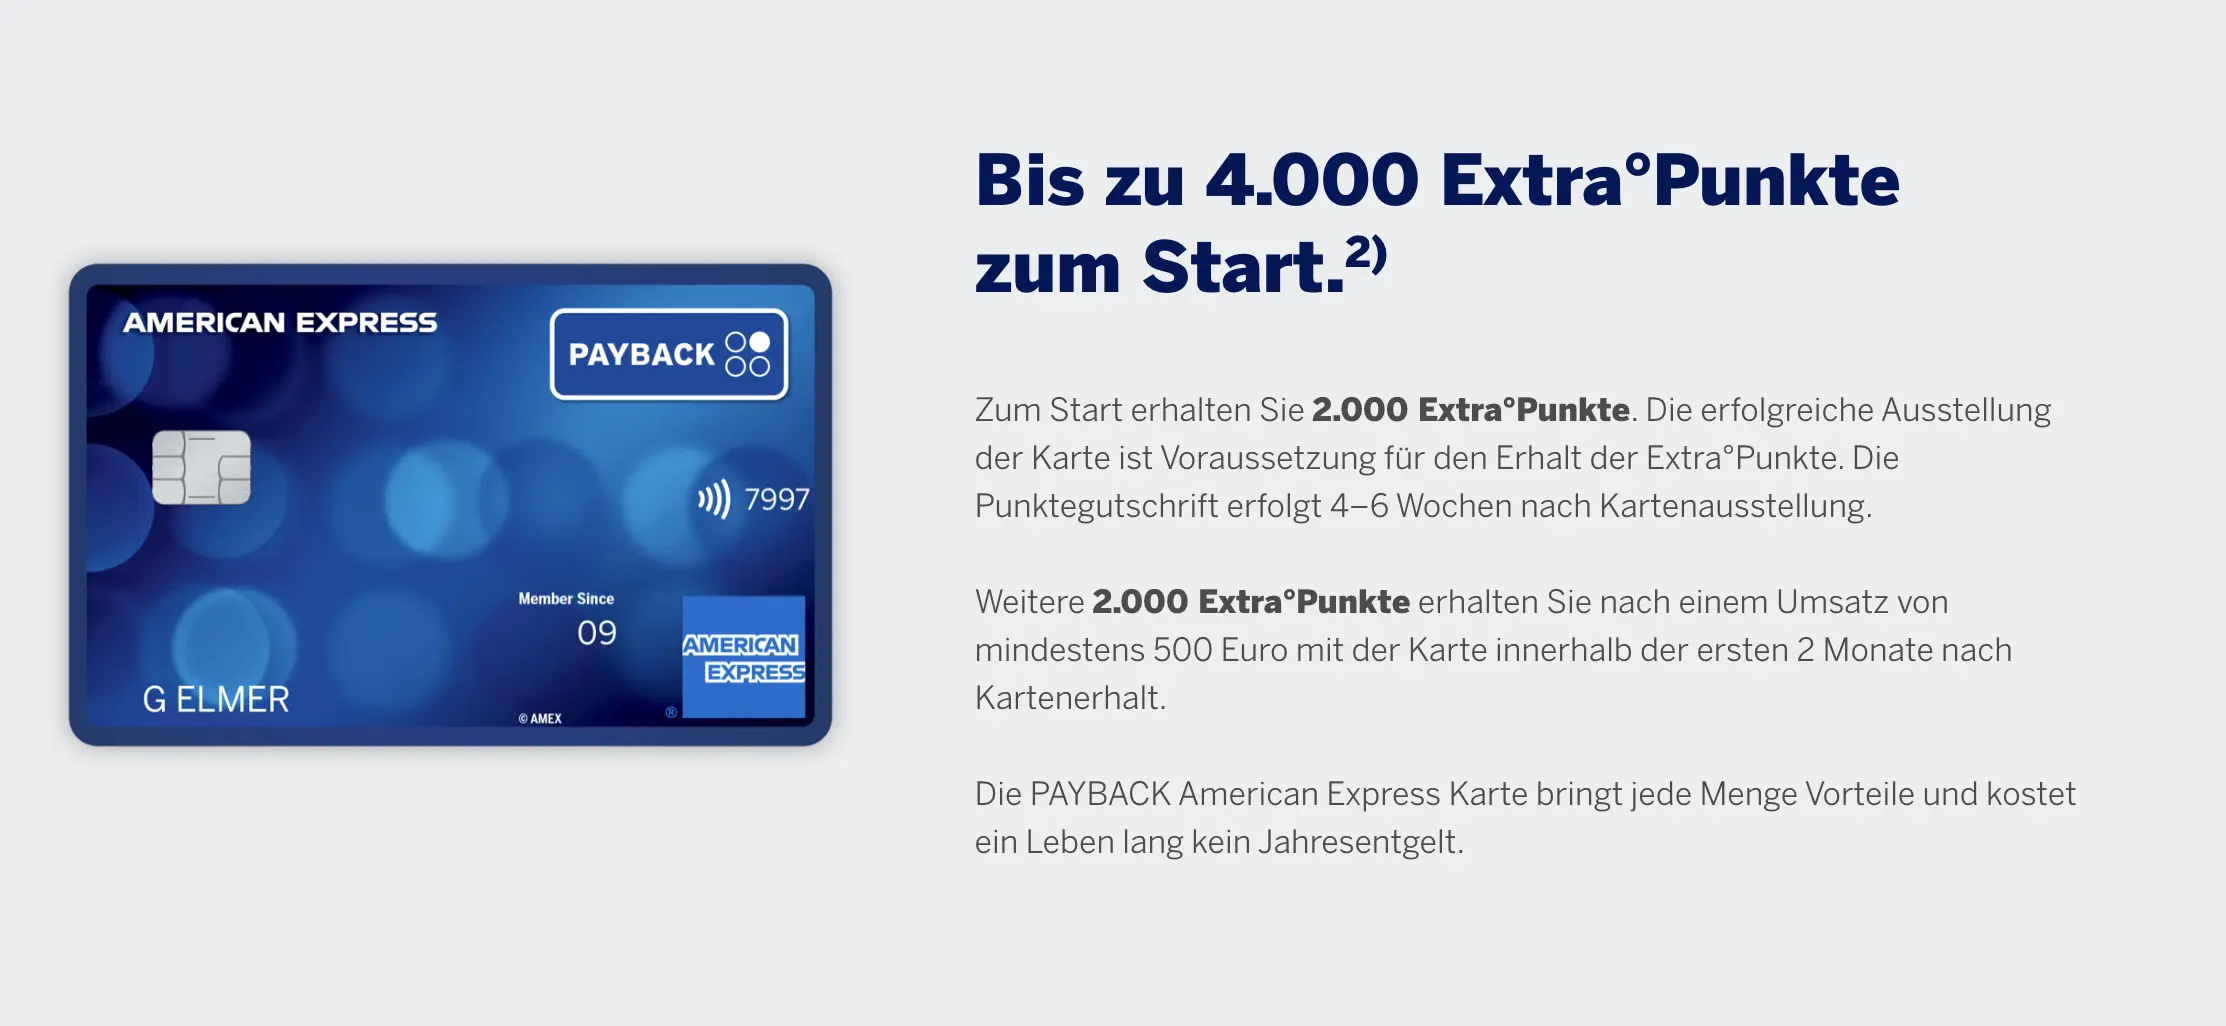 Payback American Express Bonus Punkte